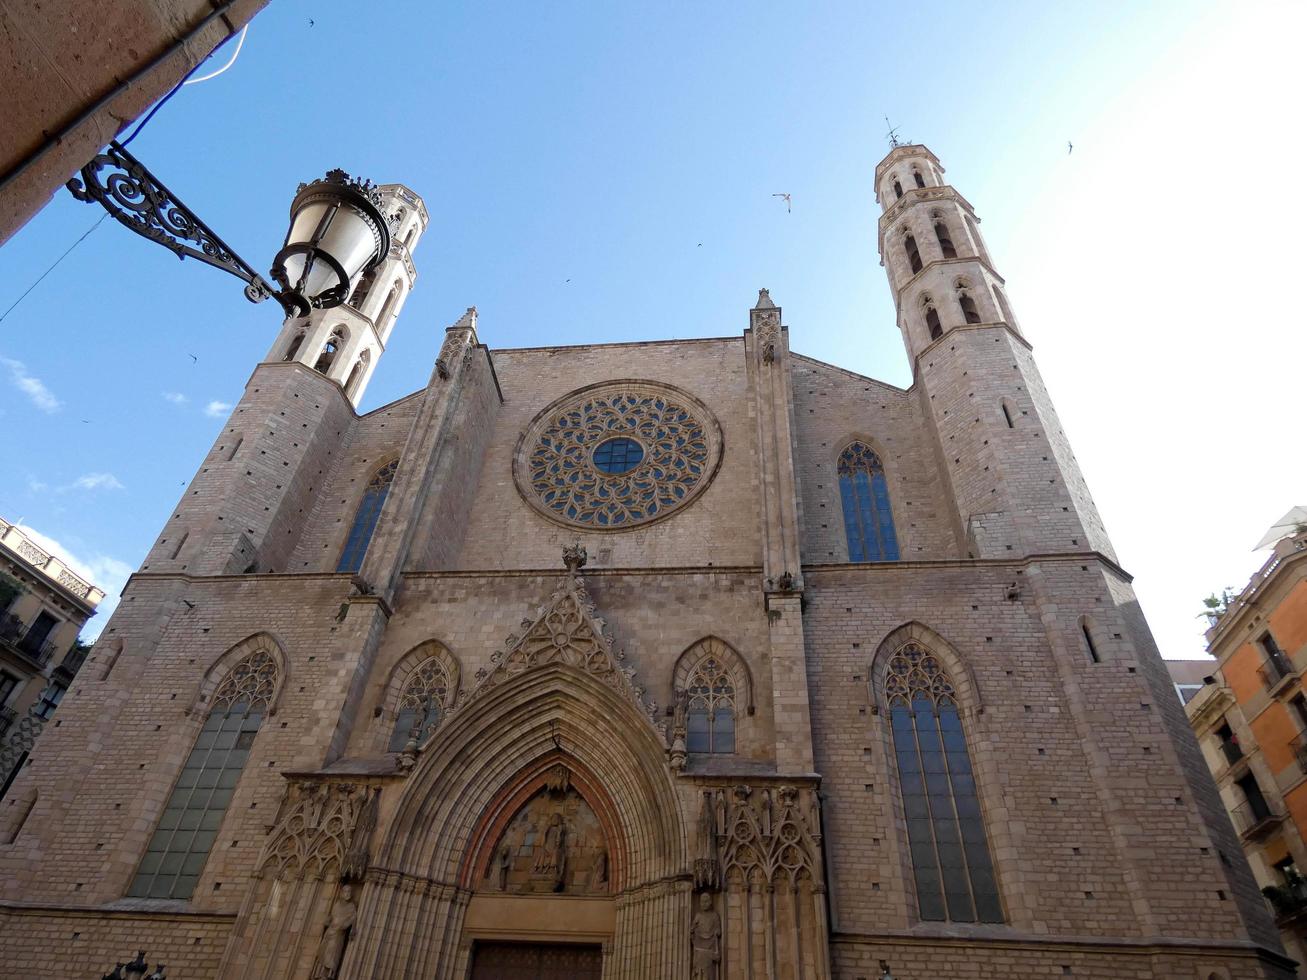 Gothic church of Santa Maria del Mar in Barcelona photo